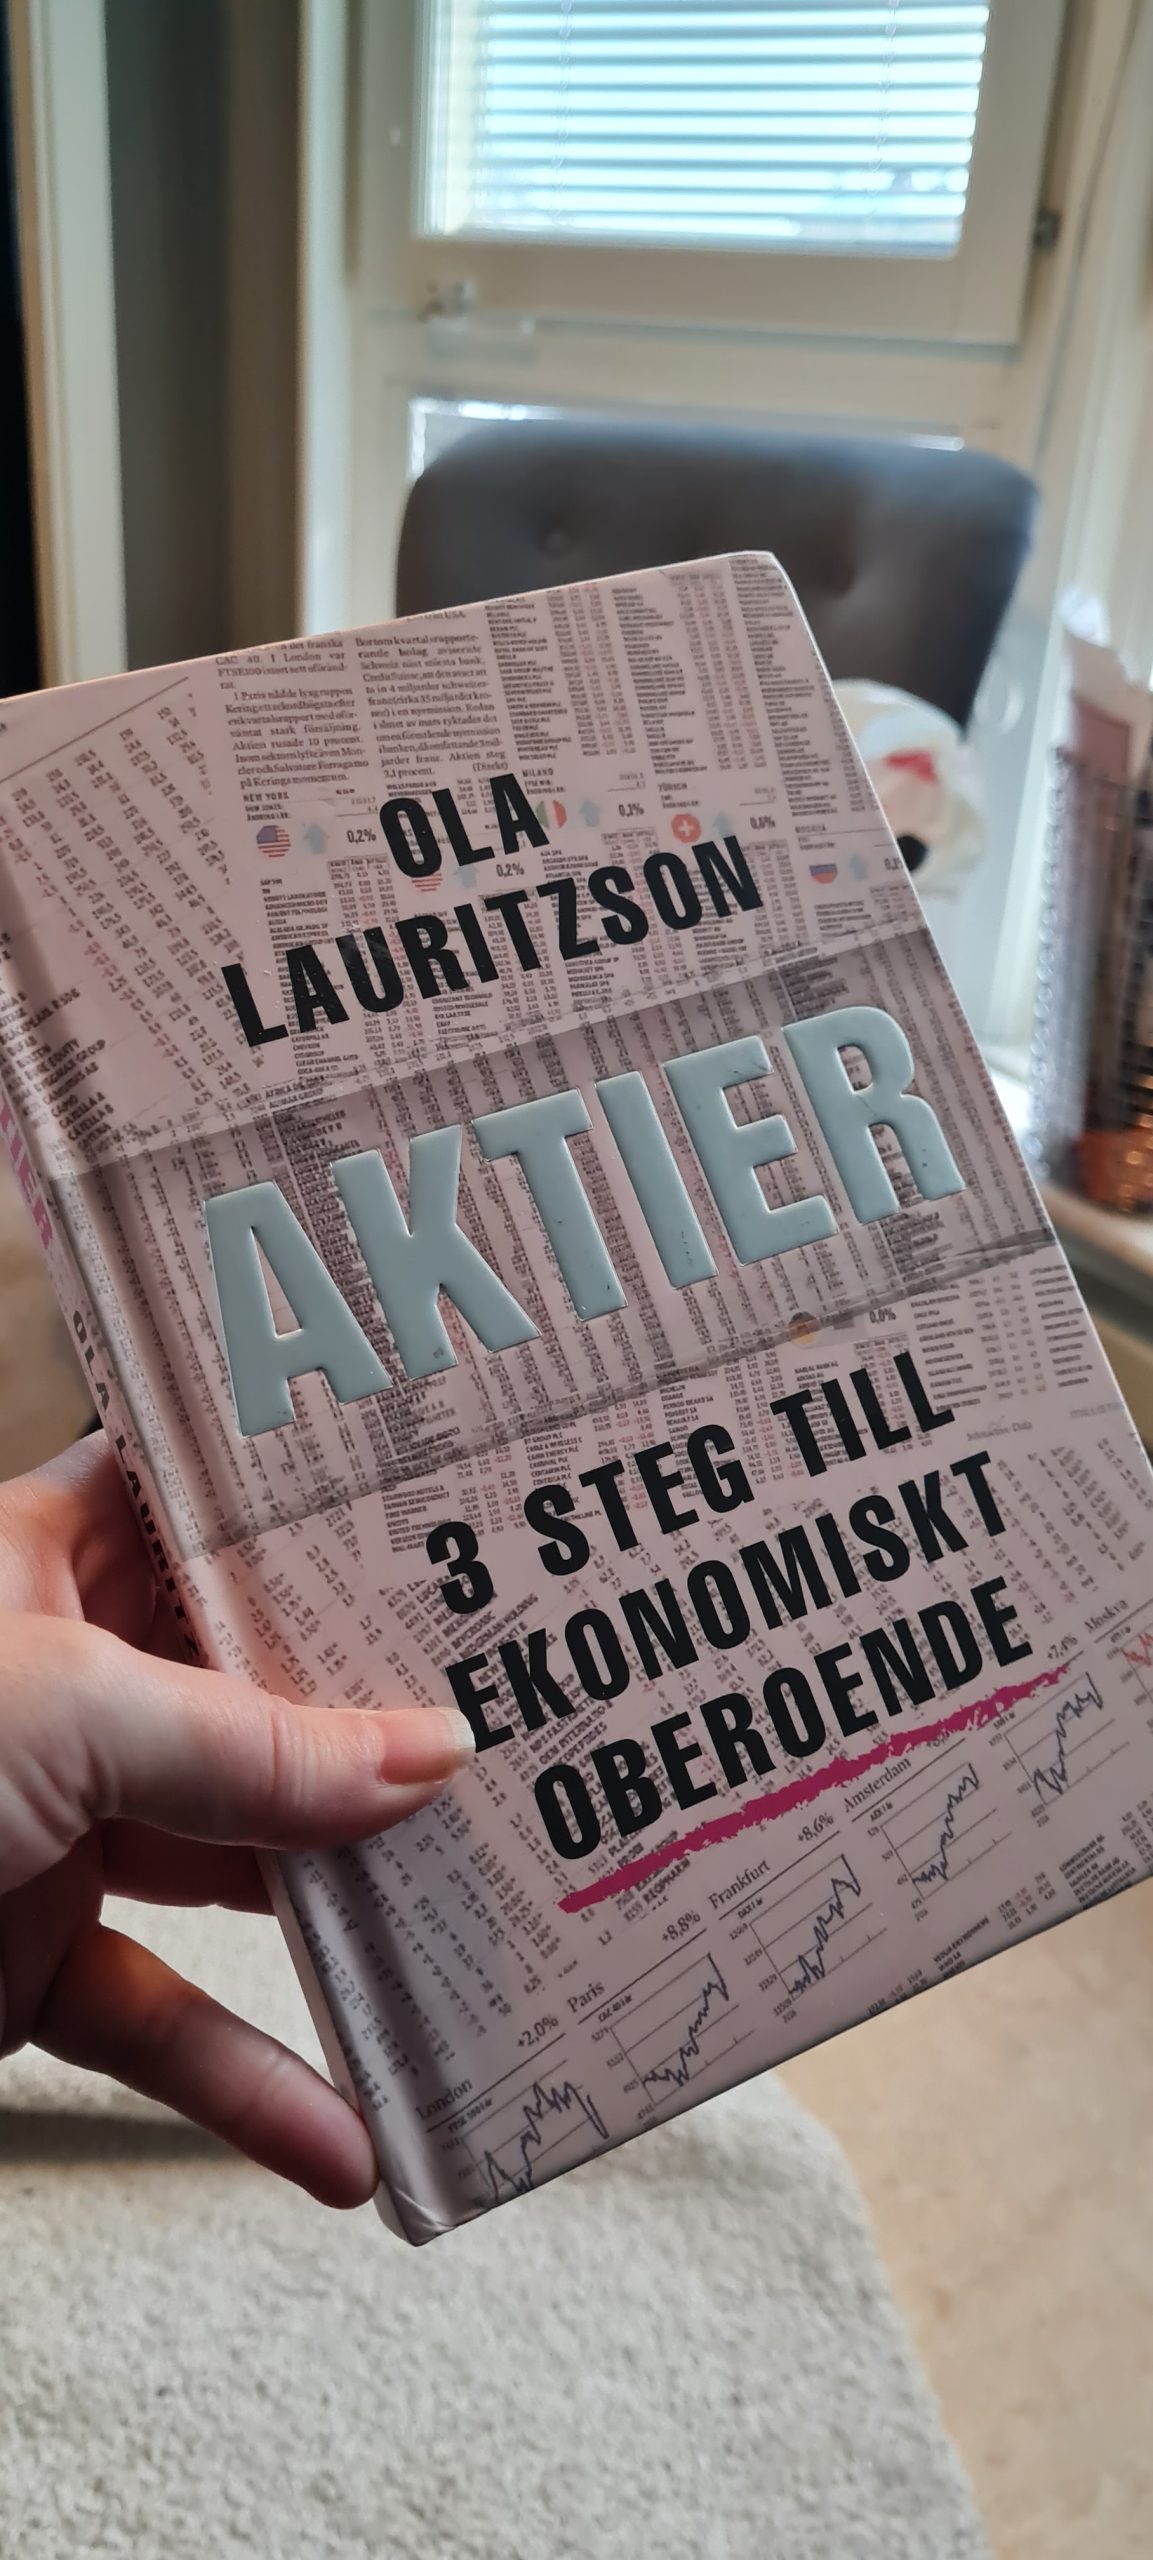 Aktier 3 steg till ekonomisk oberoende av Ola Lauritzson